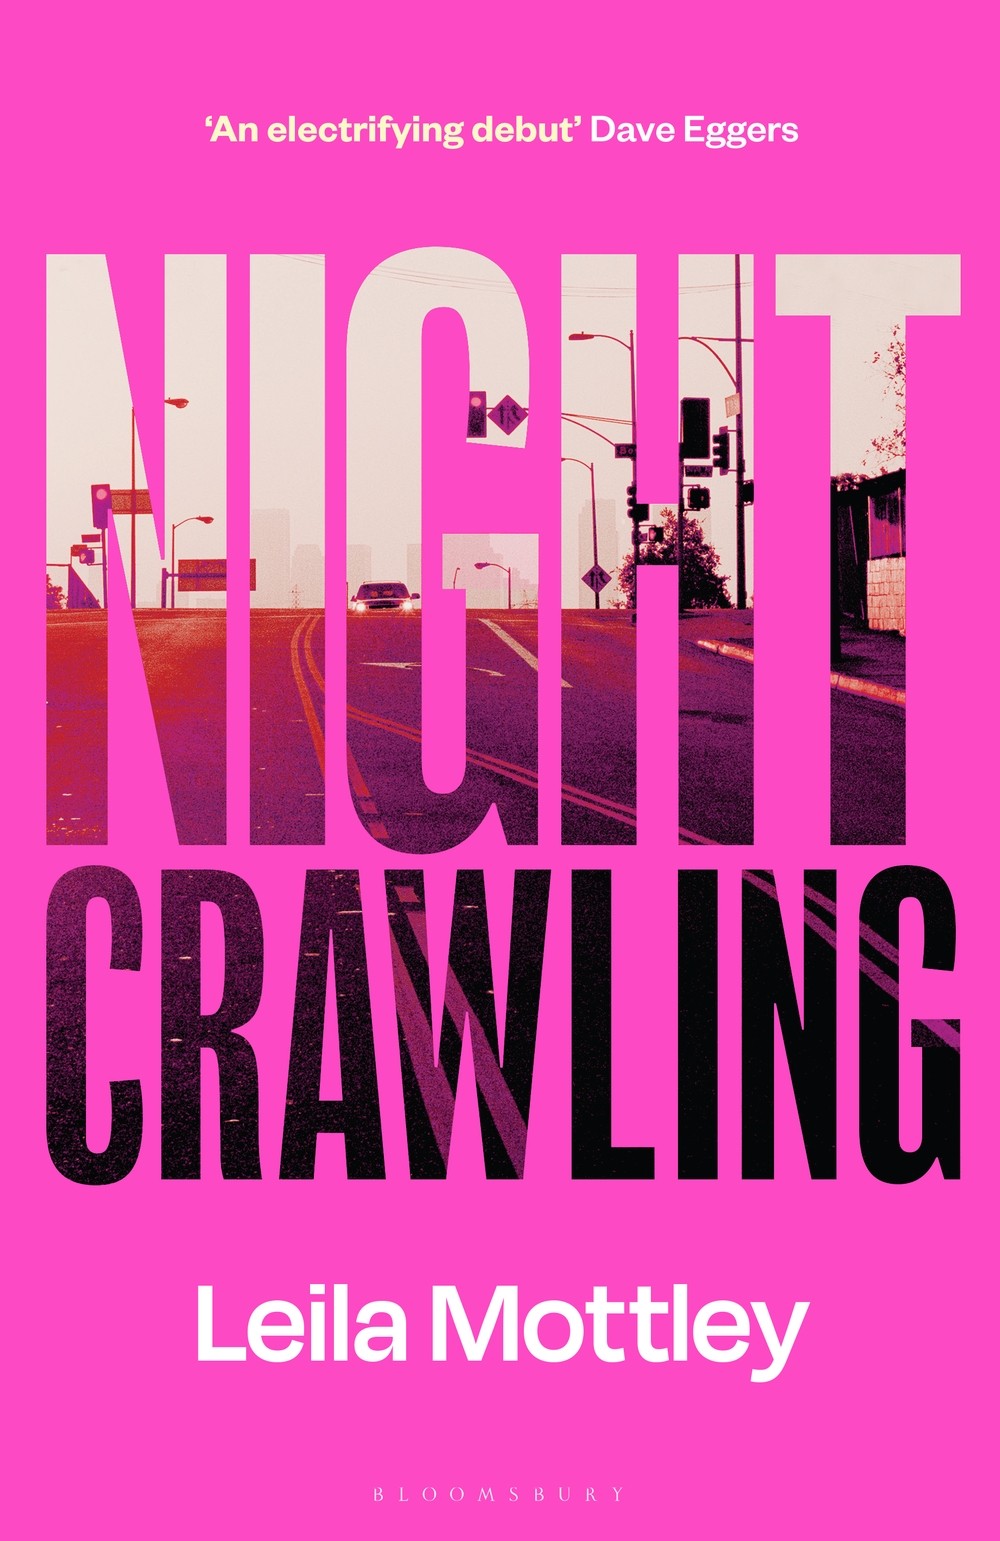 Book Review Nightcrawling